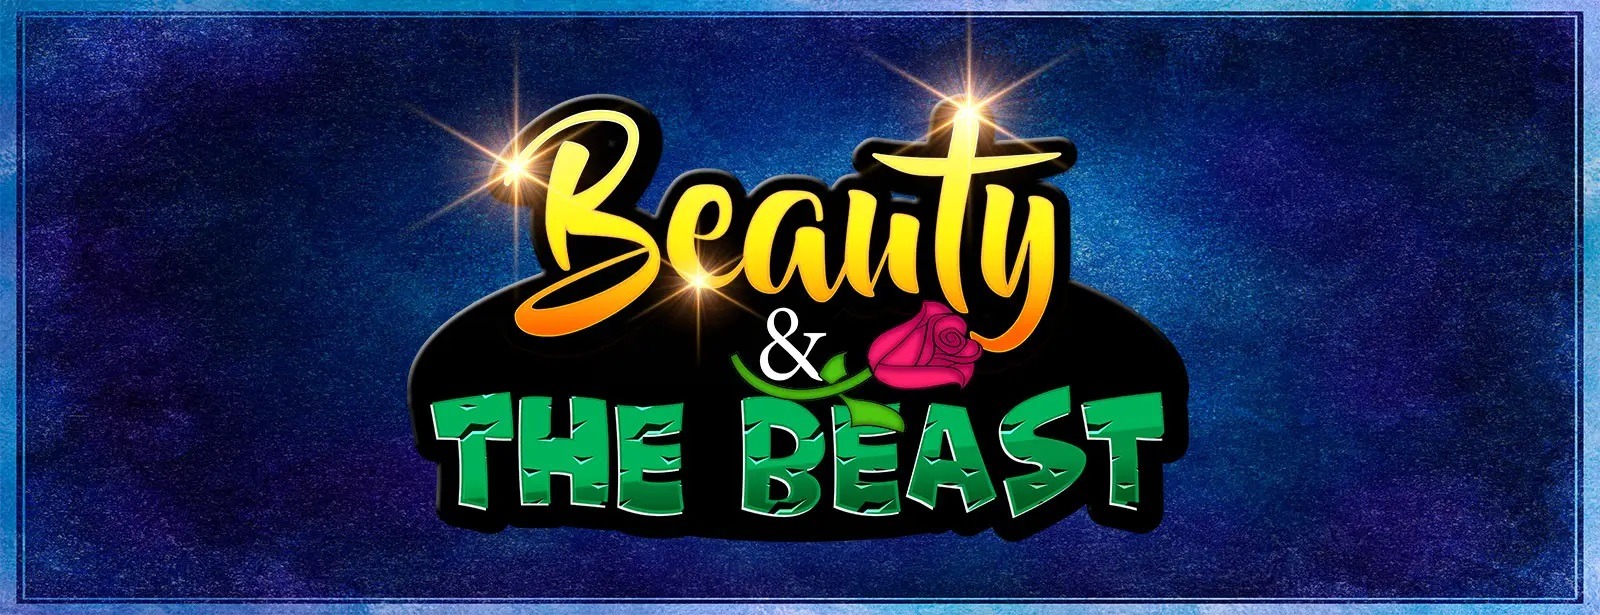 “Beauty & The Beast” Play - Coming Soon in UAE